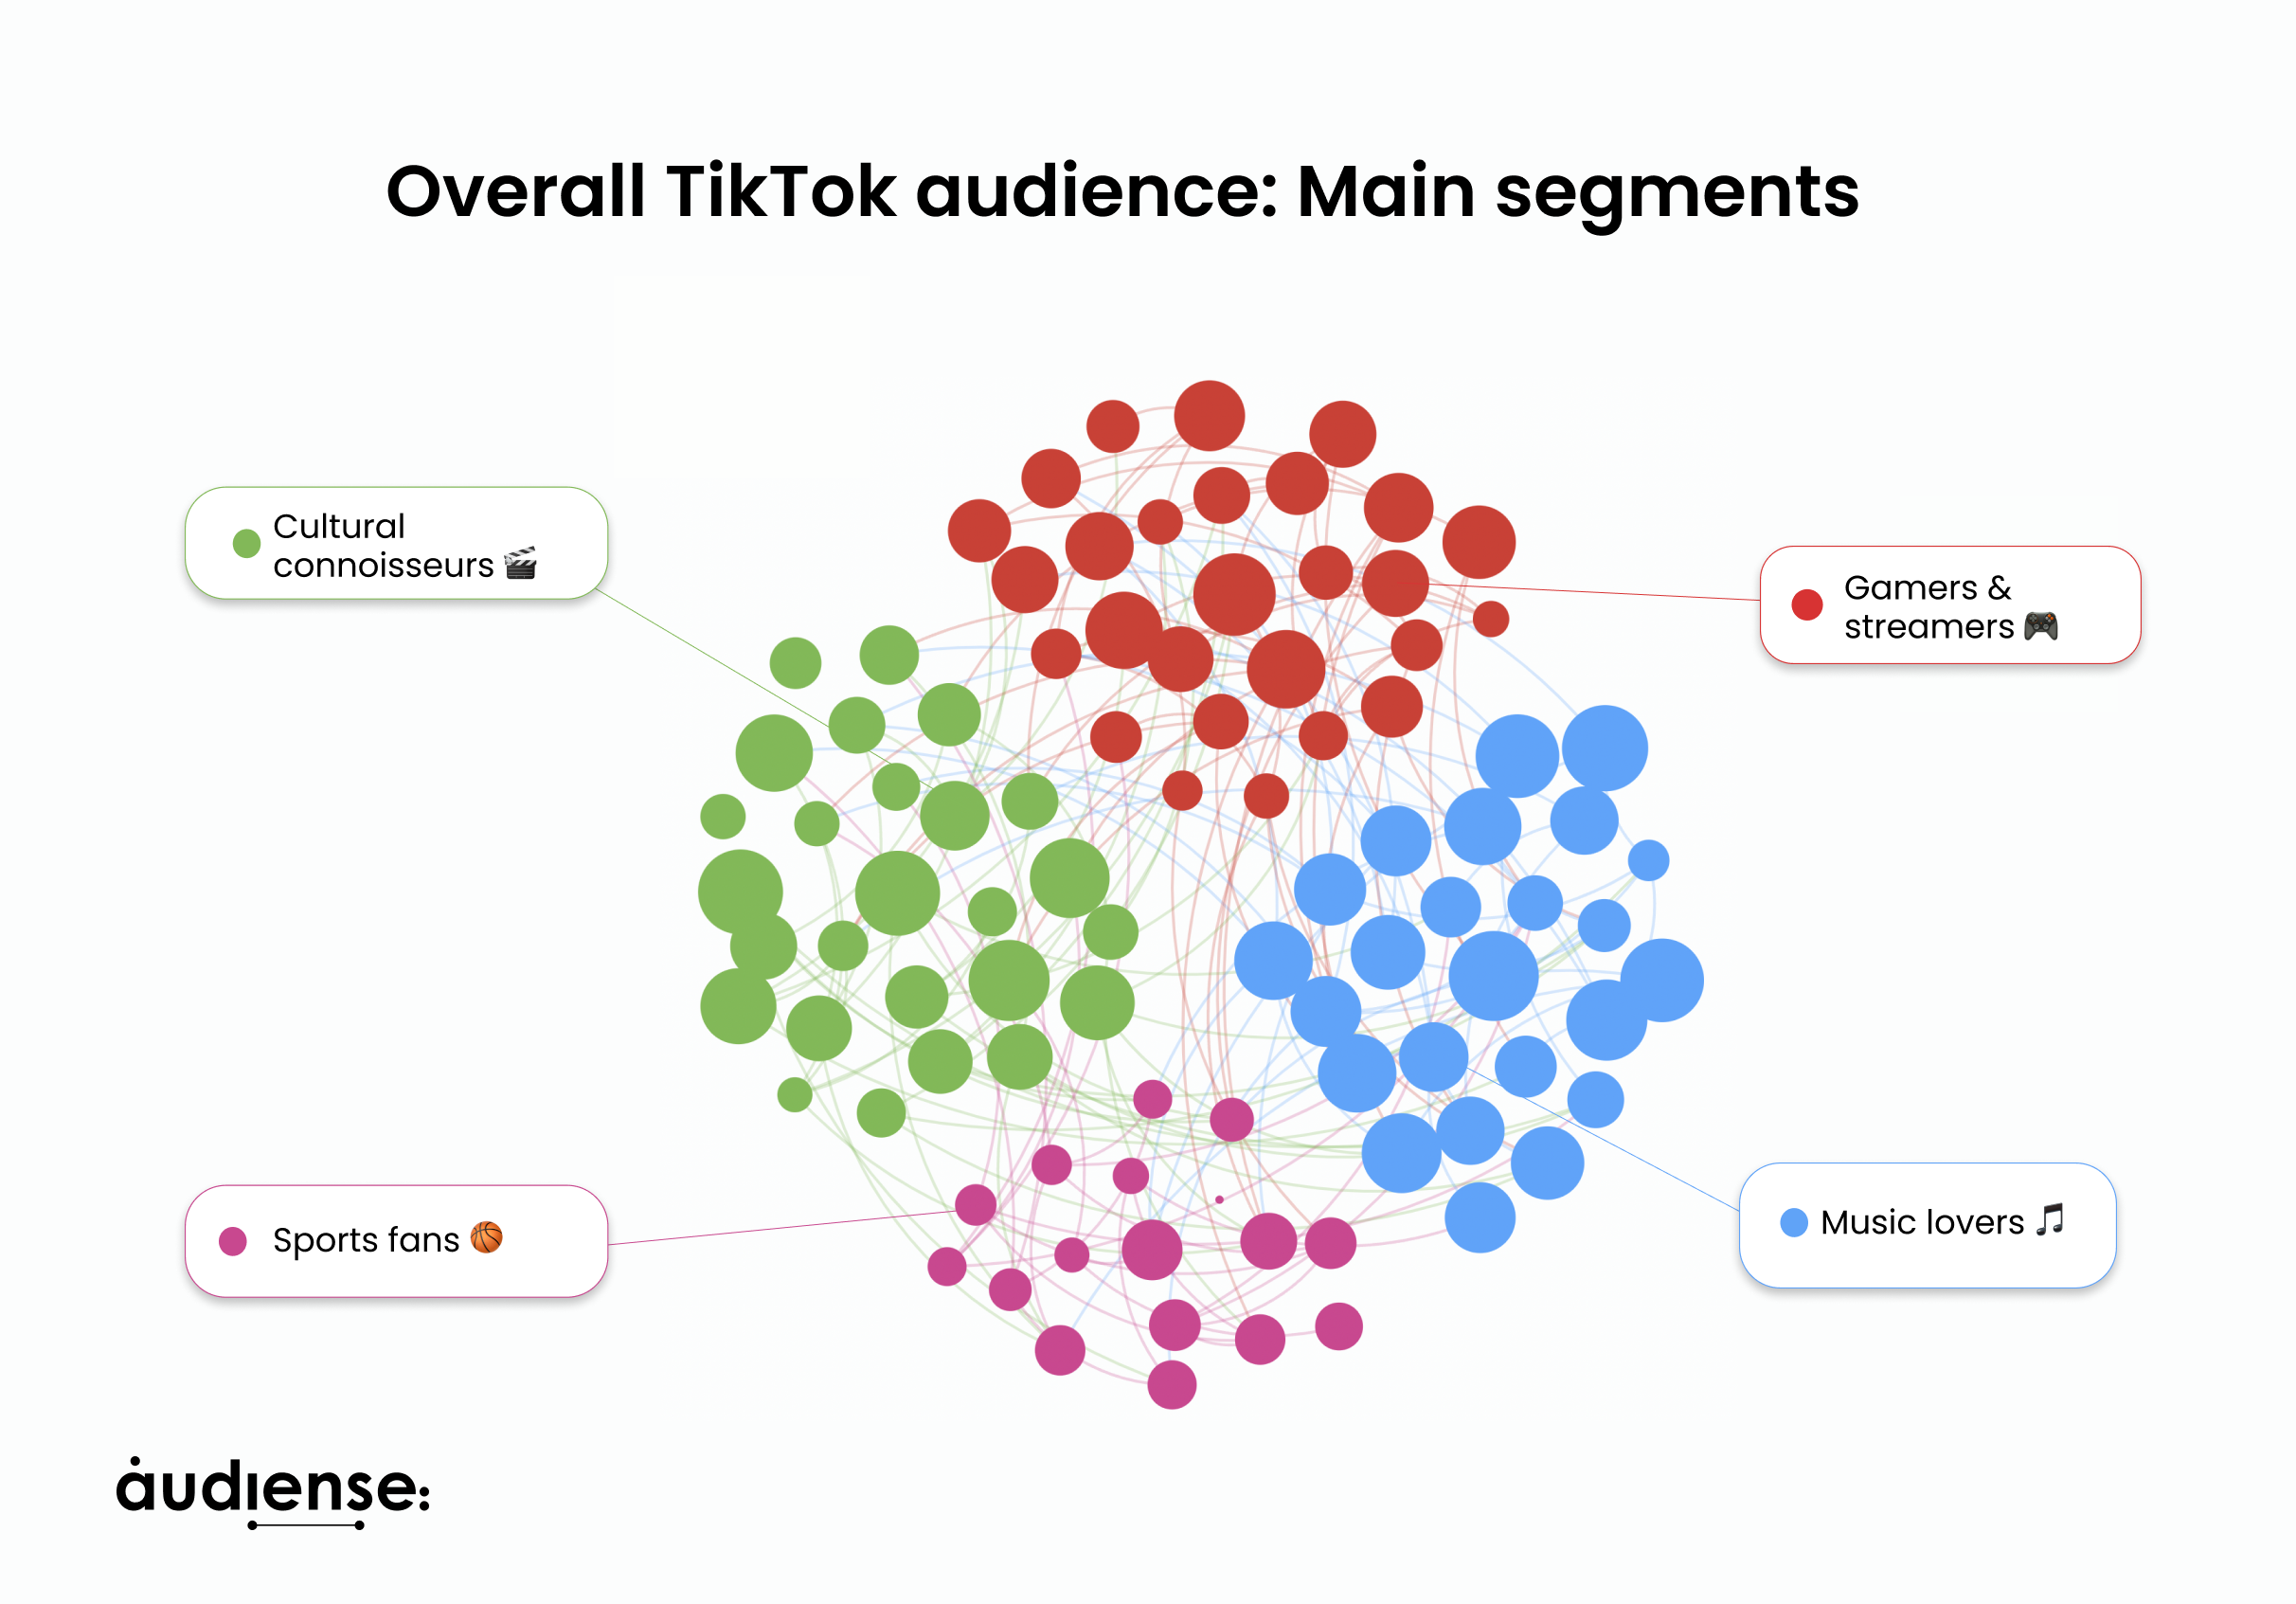 Overall TikTok audience: main segments